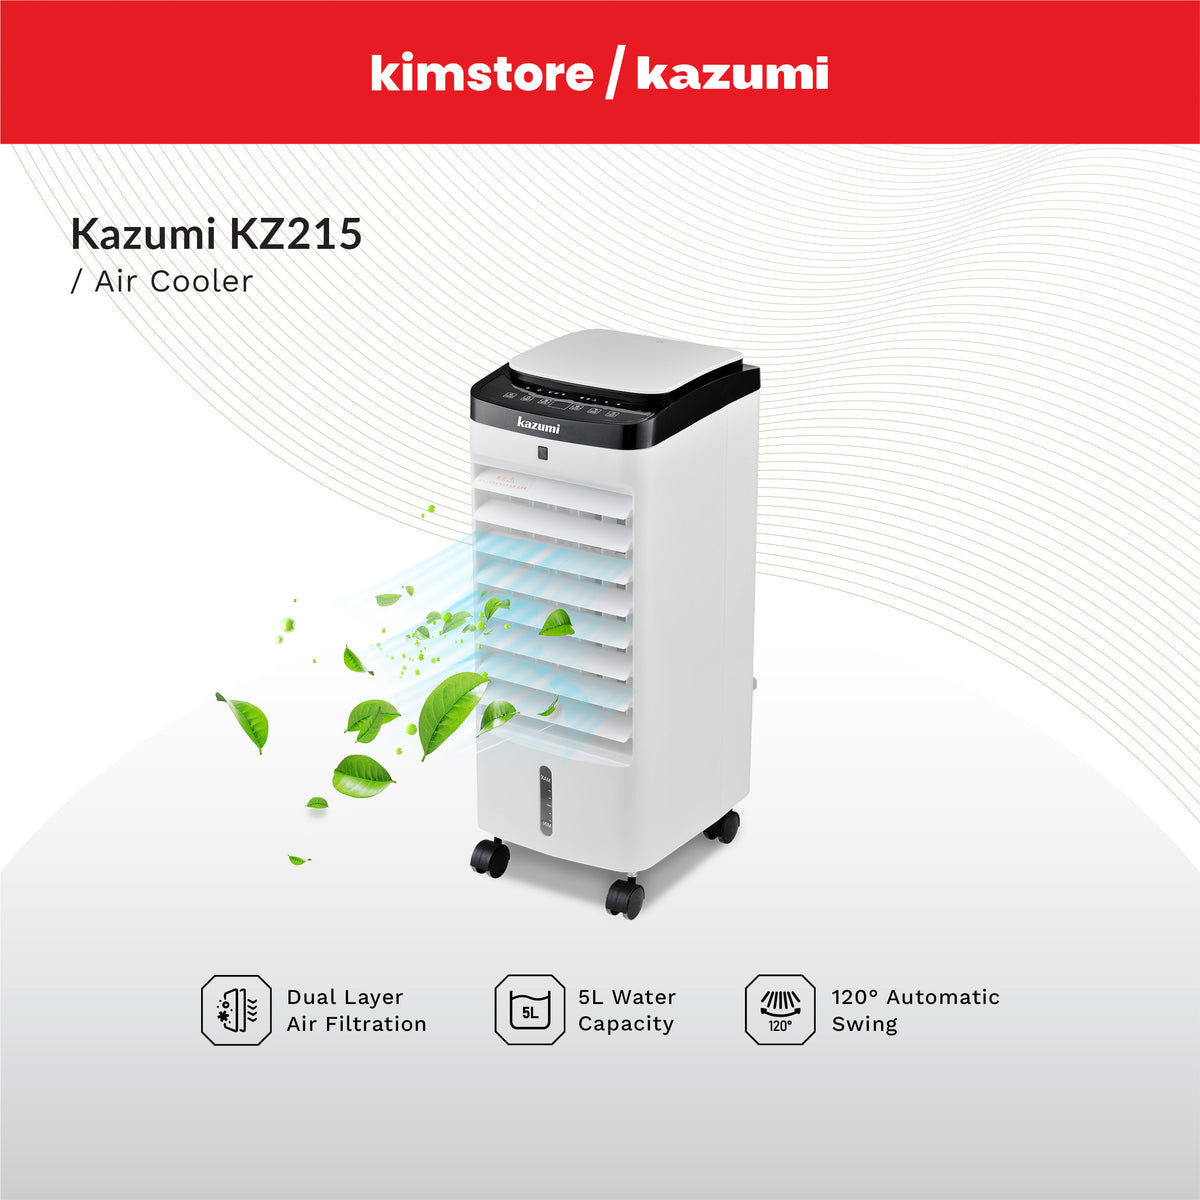 [BROWN BOX] KAZUMI KZ215 Air Cooler